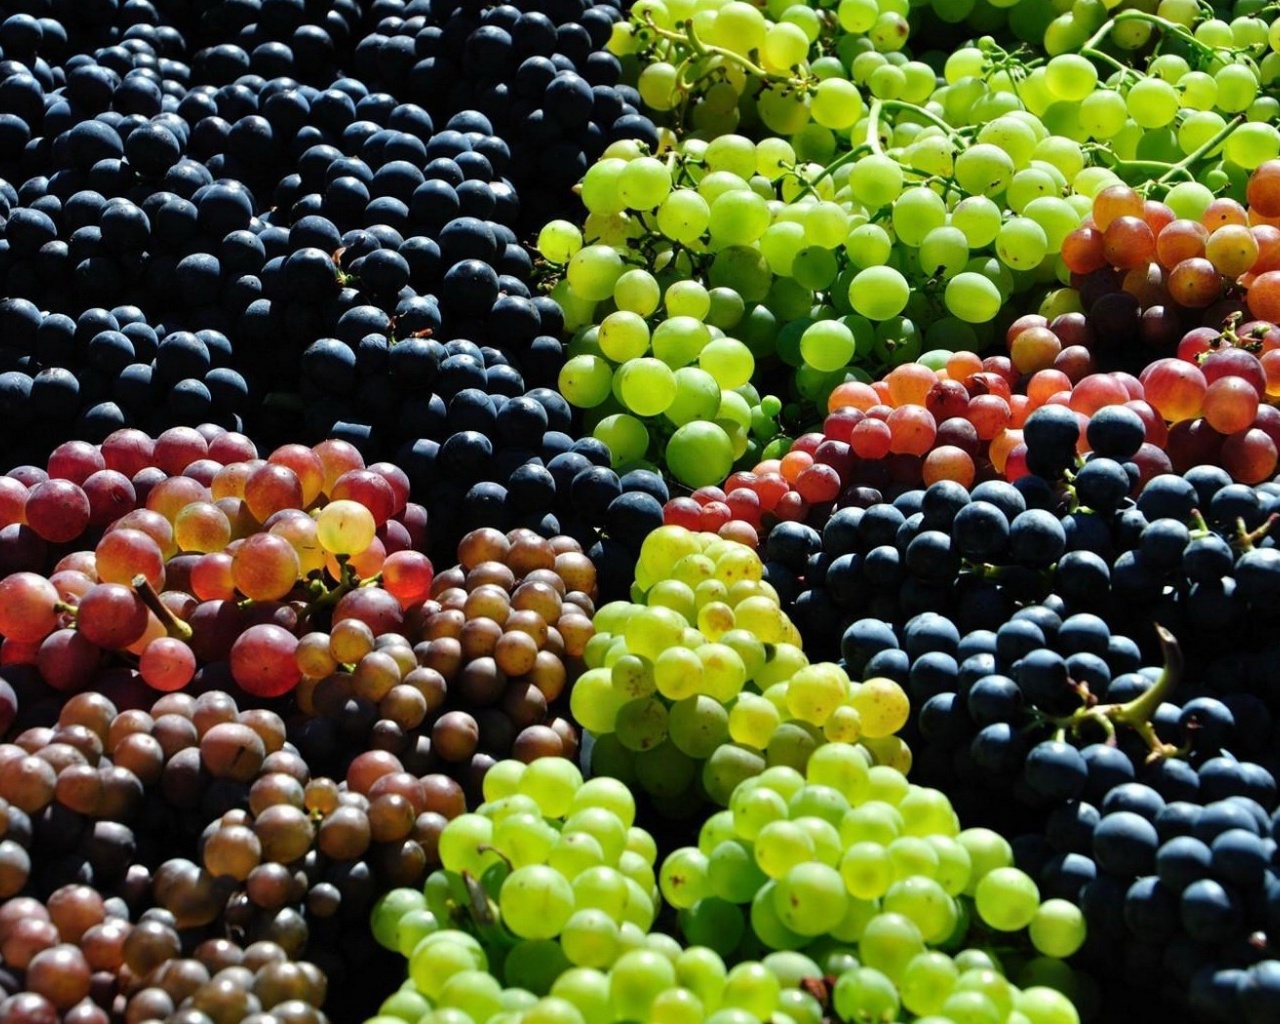 image of a grape harvest